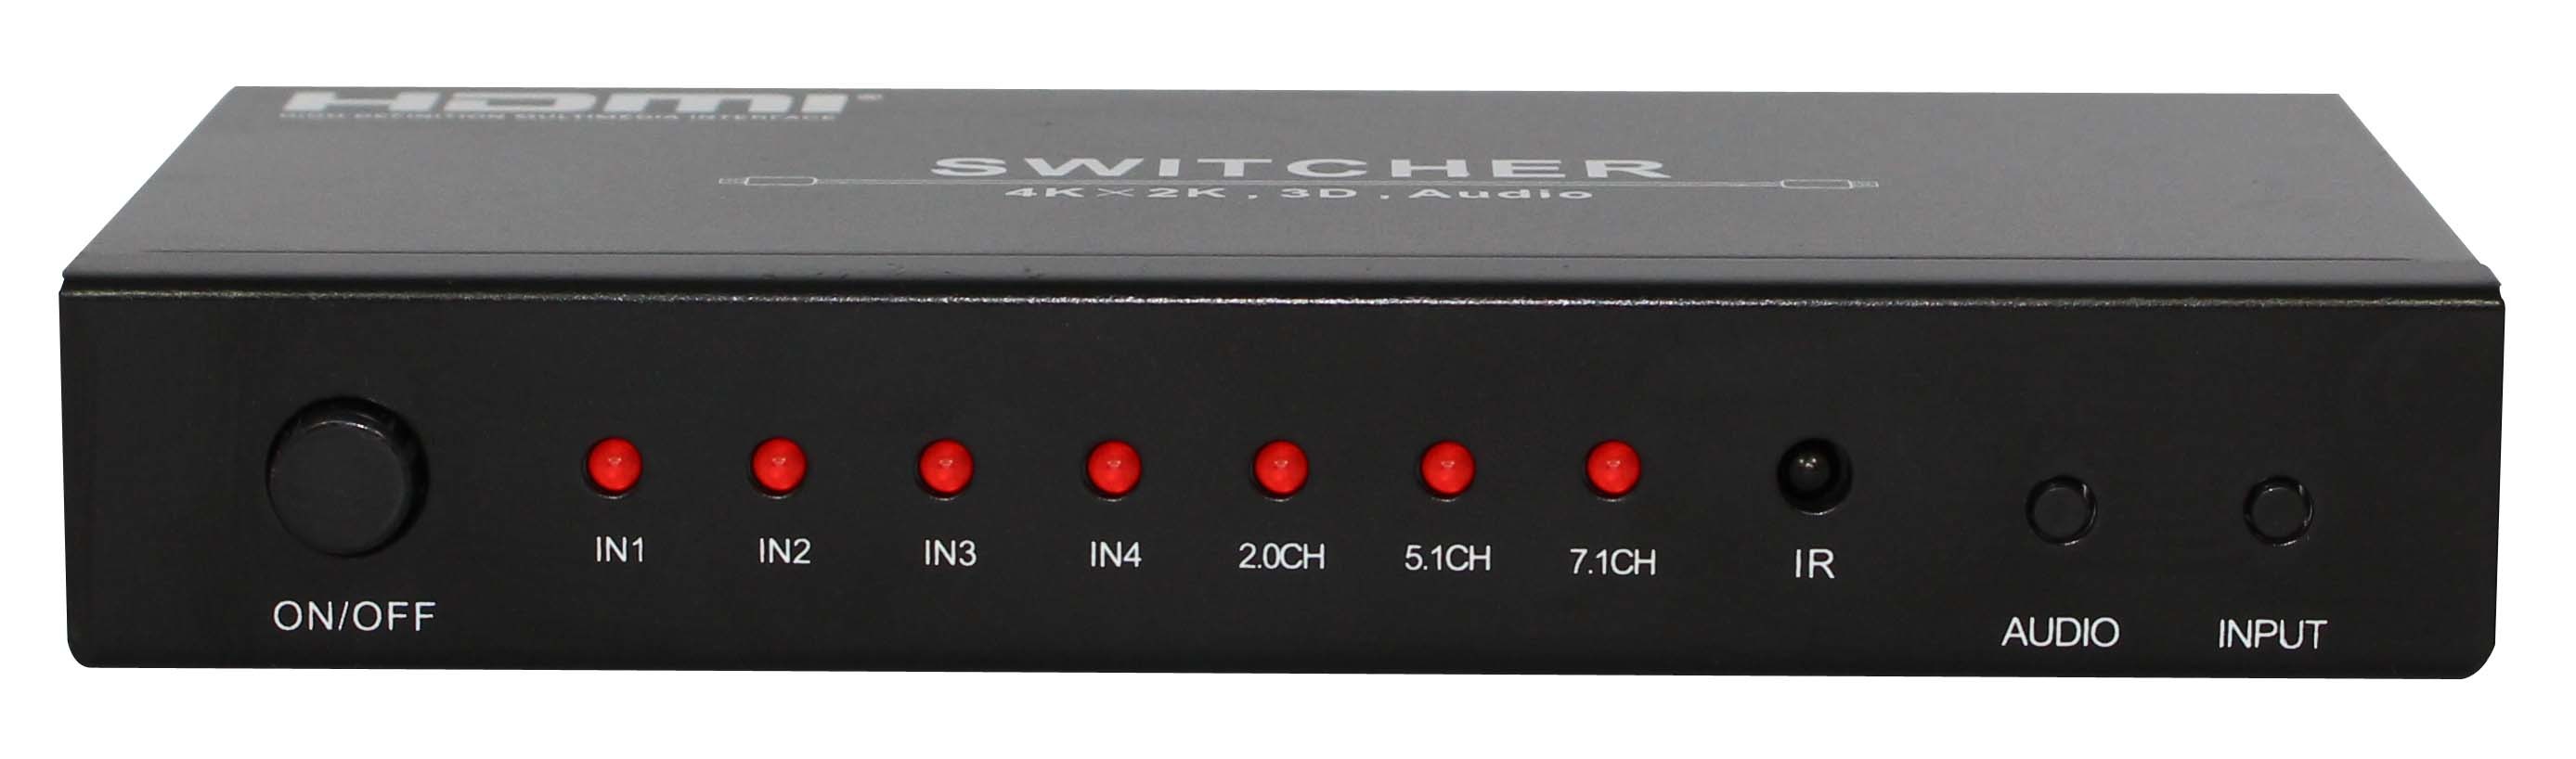 4X1 HDMI Switcher 1.4V with Audio